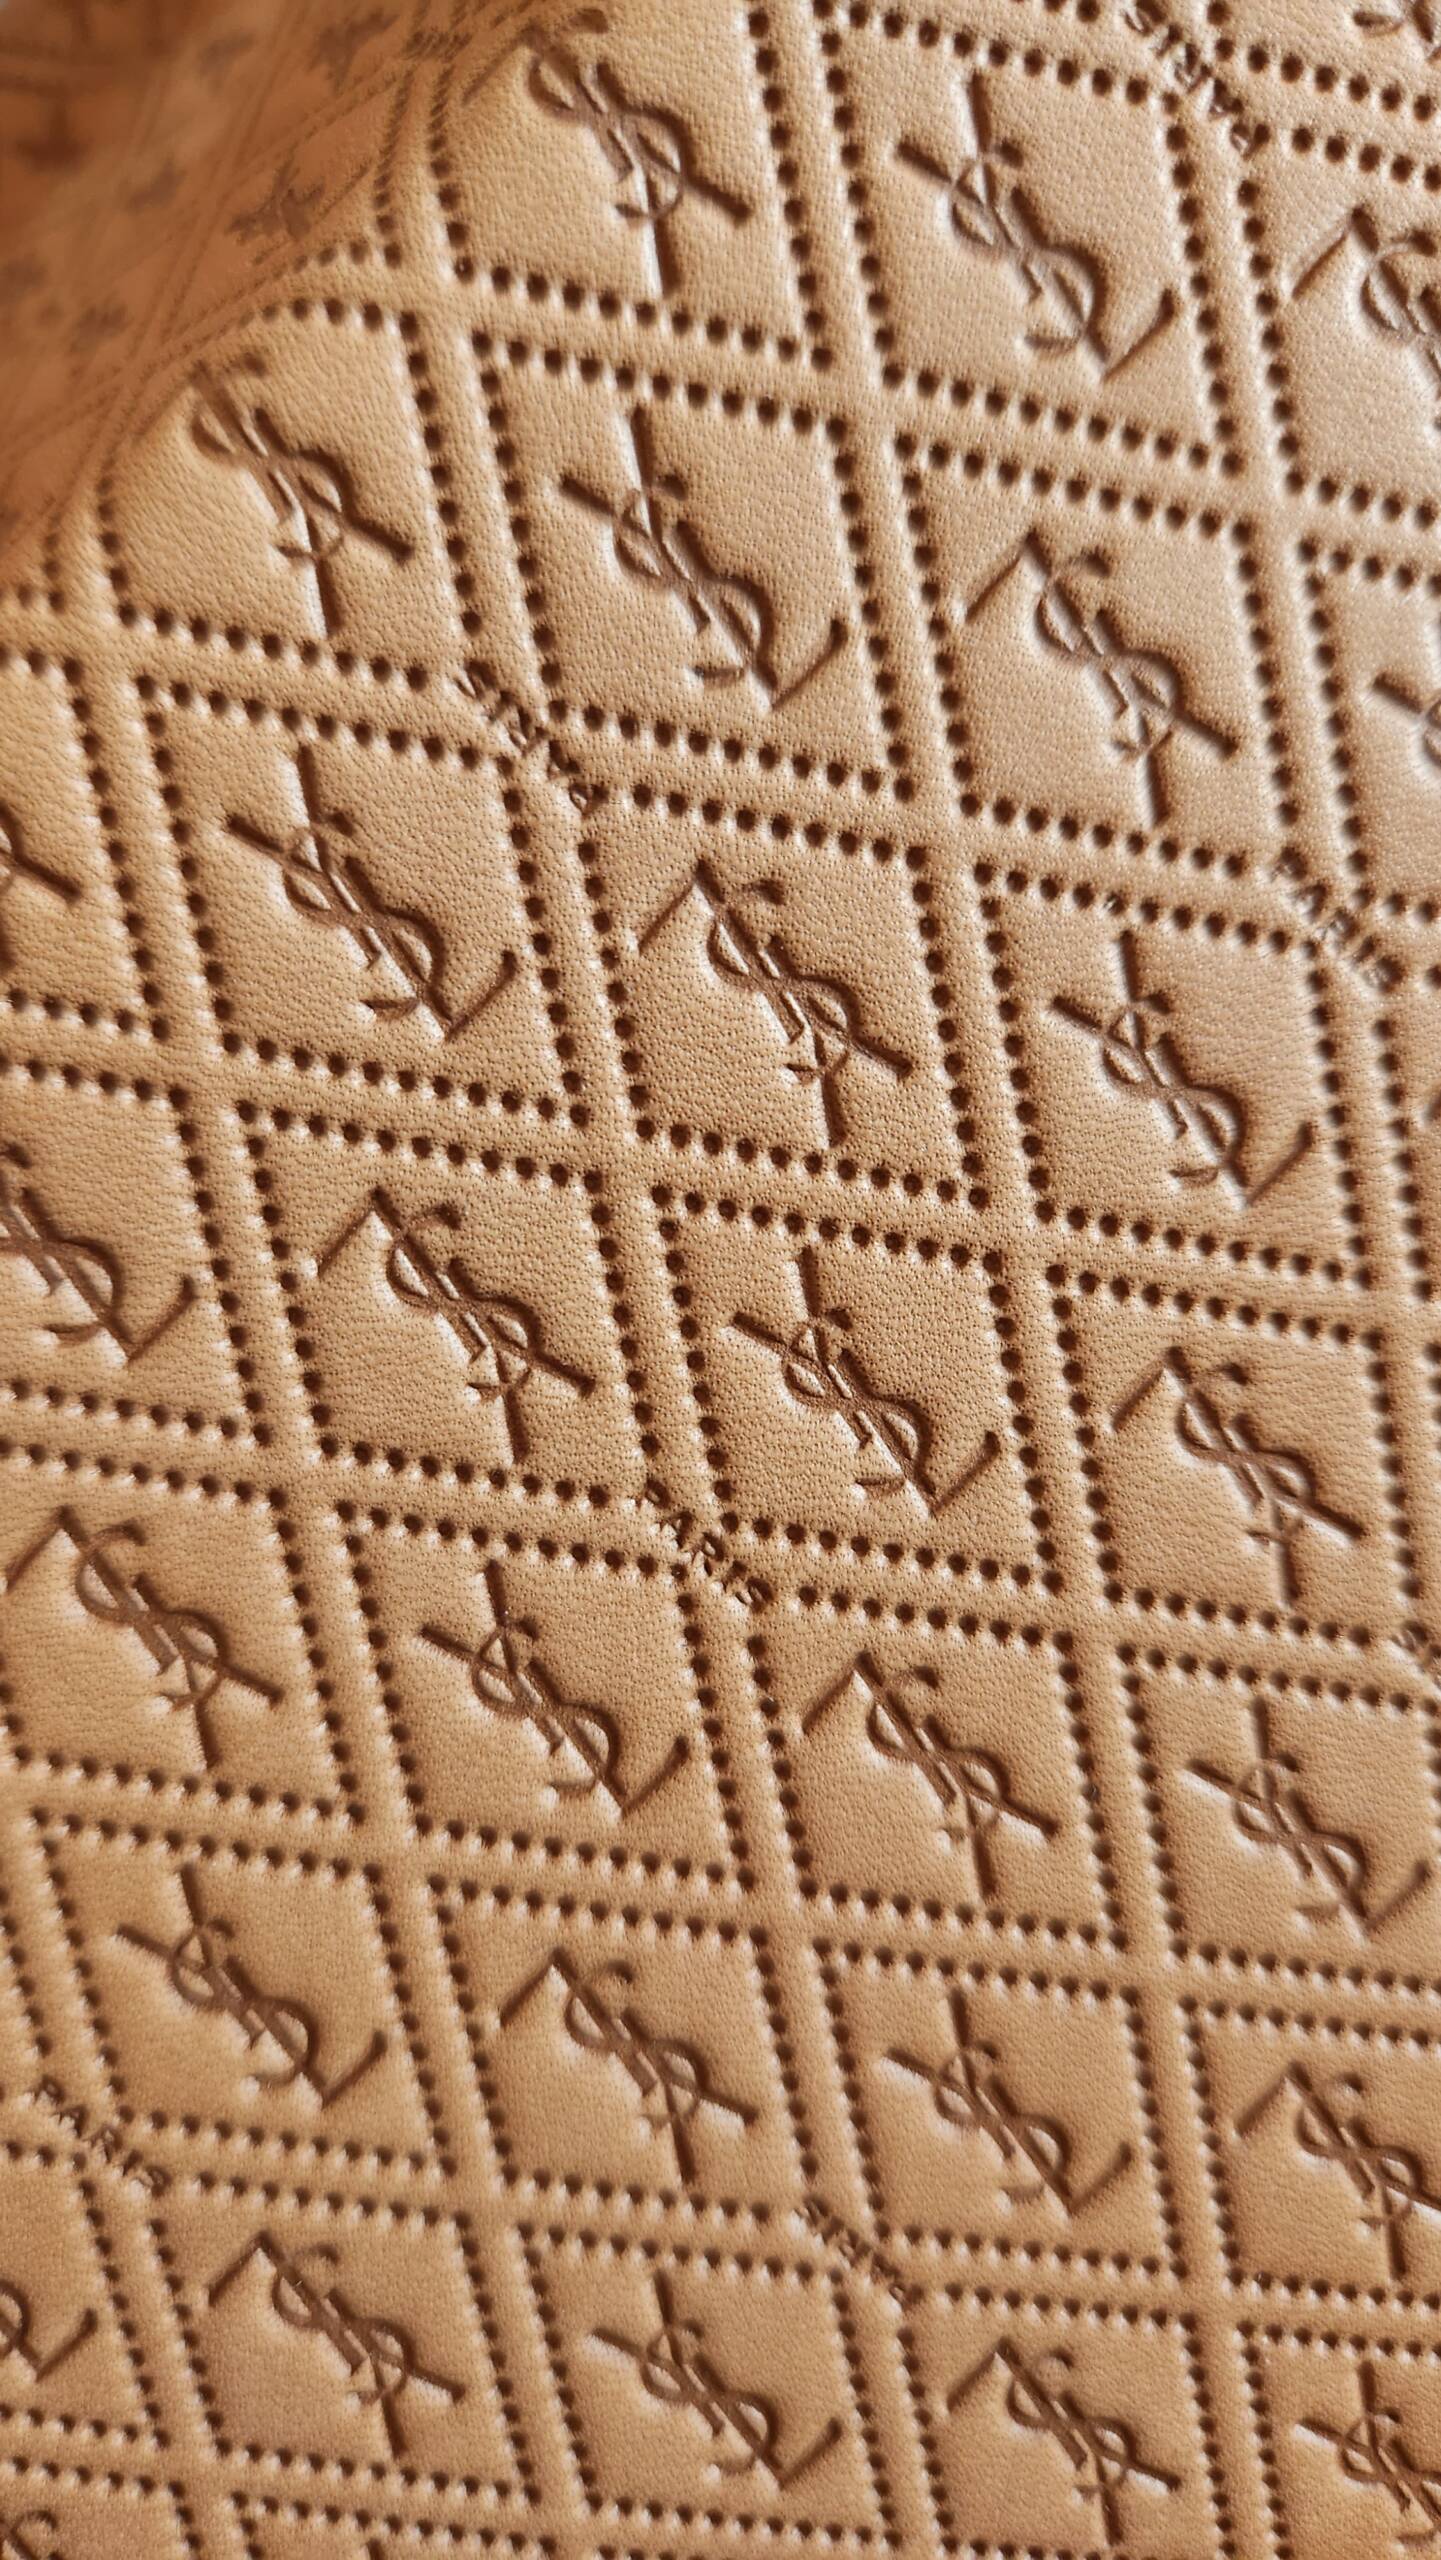 take-away box in leather